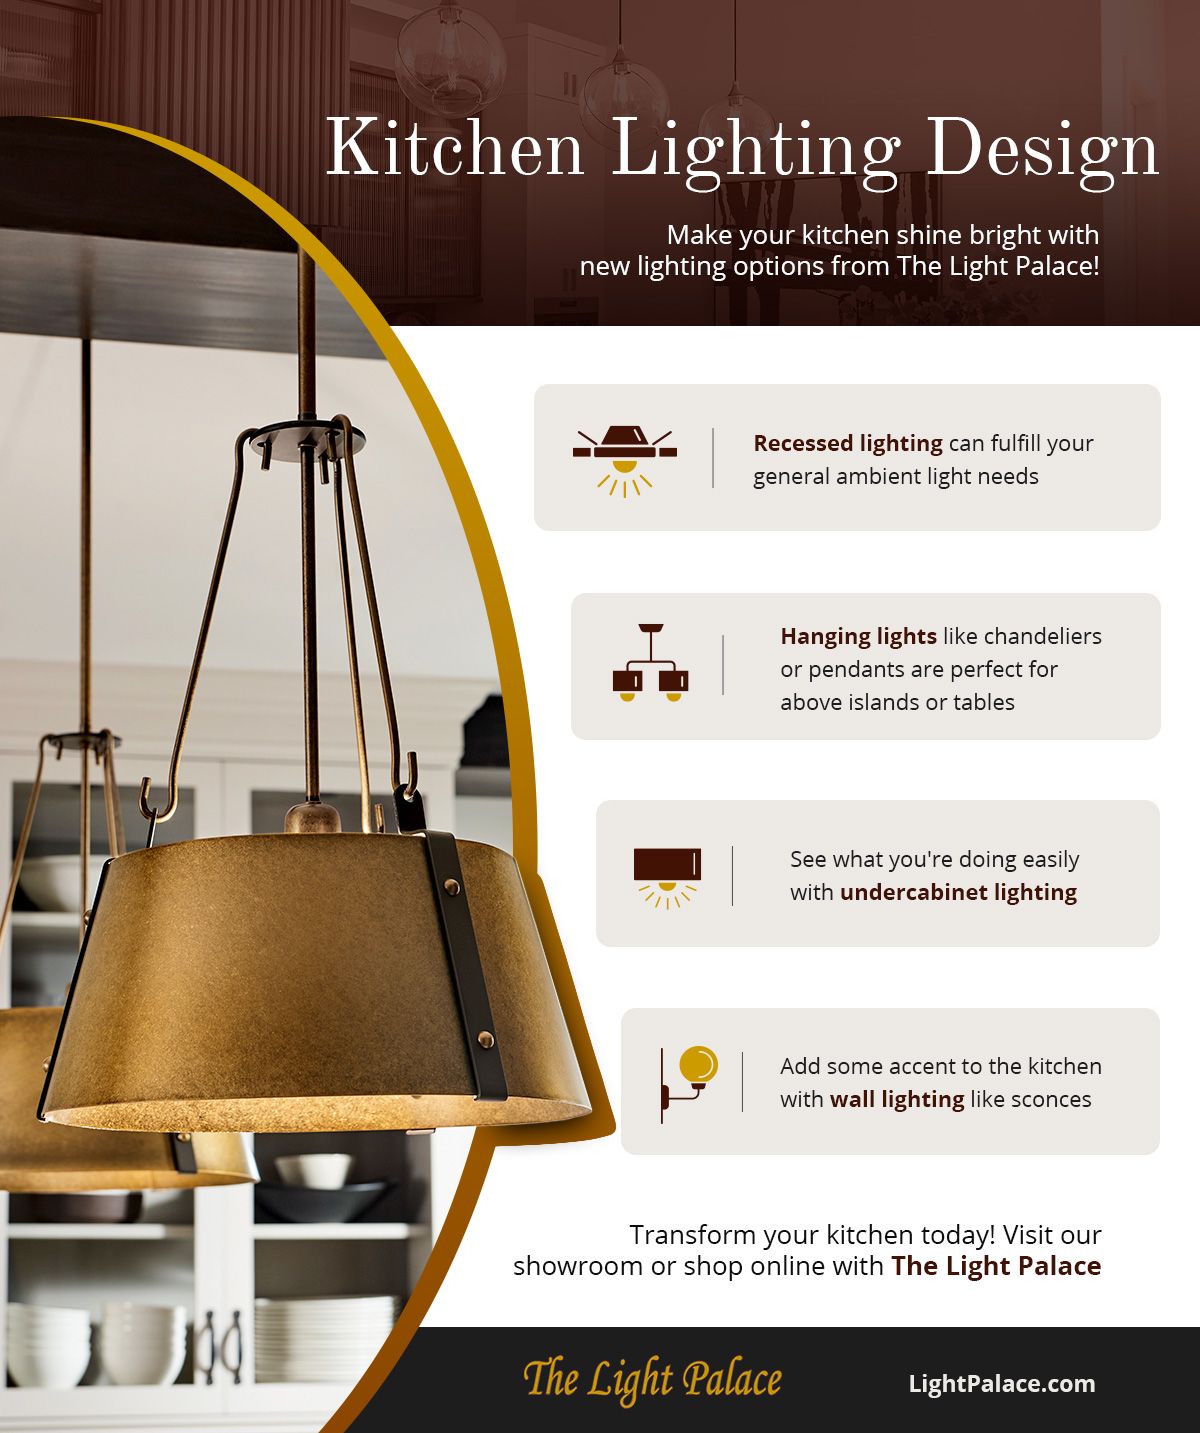 2021-04-08-Kitchen-Lighting-Design-Infographic-606f7e40c62cb.jpg